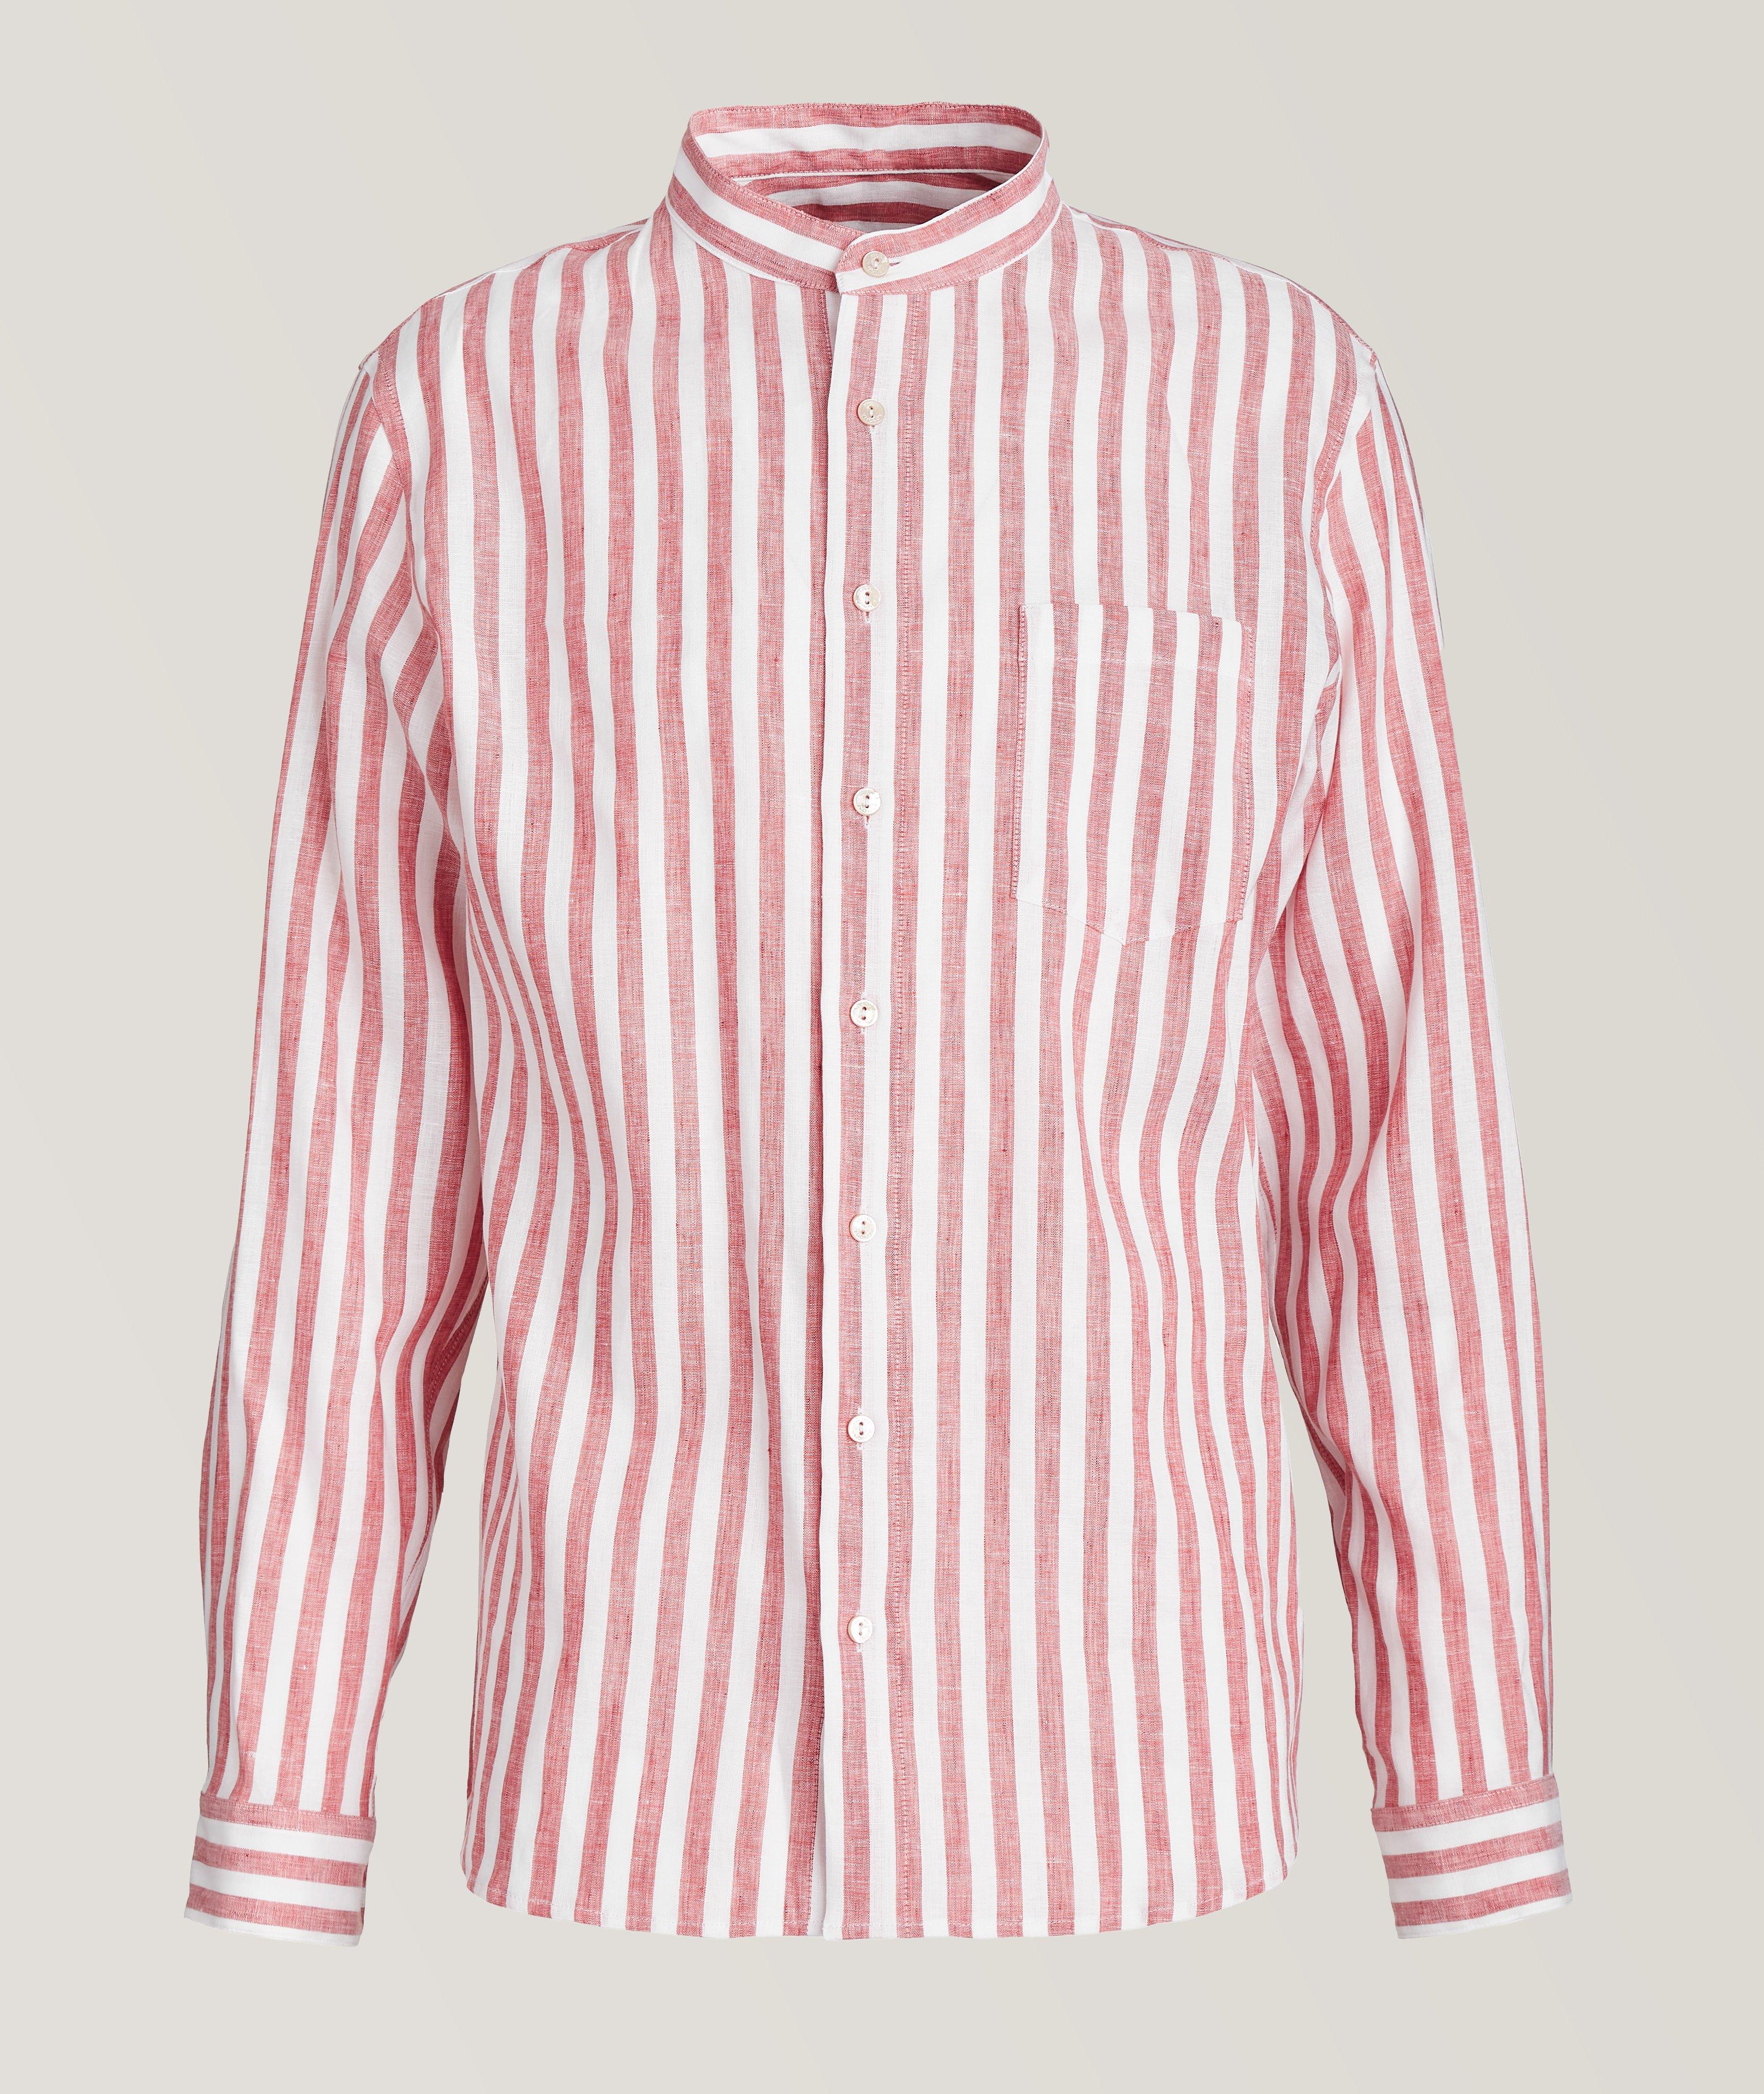 Stripe Patterned Linen Sport Shirt image 0